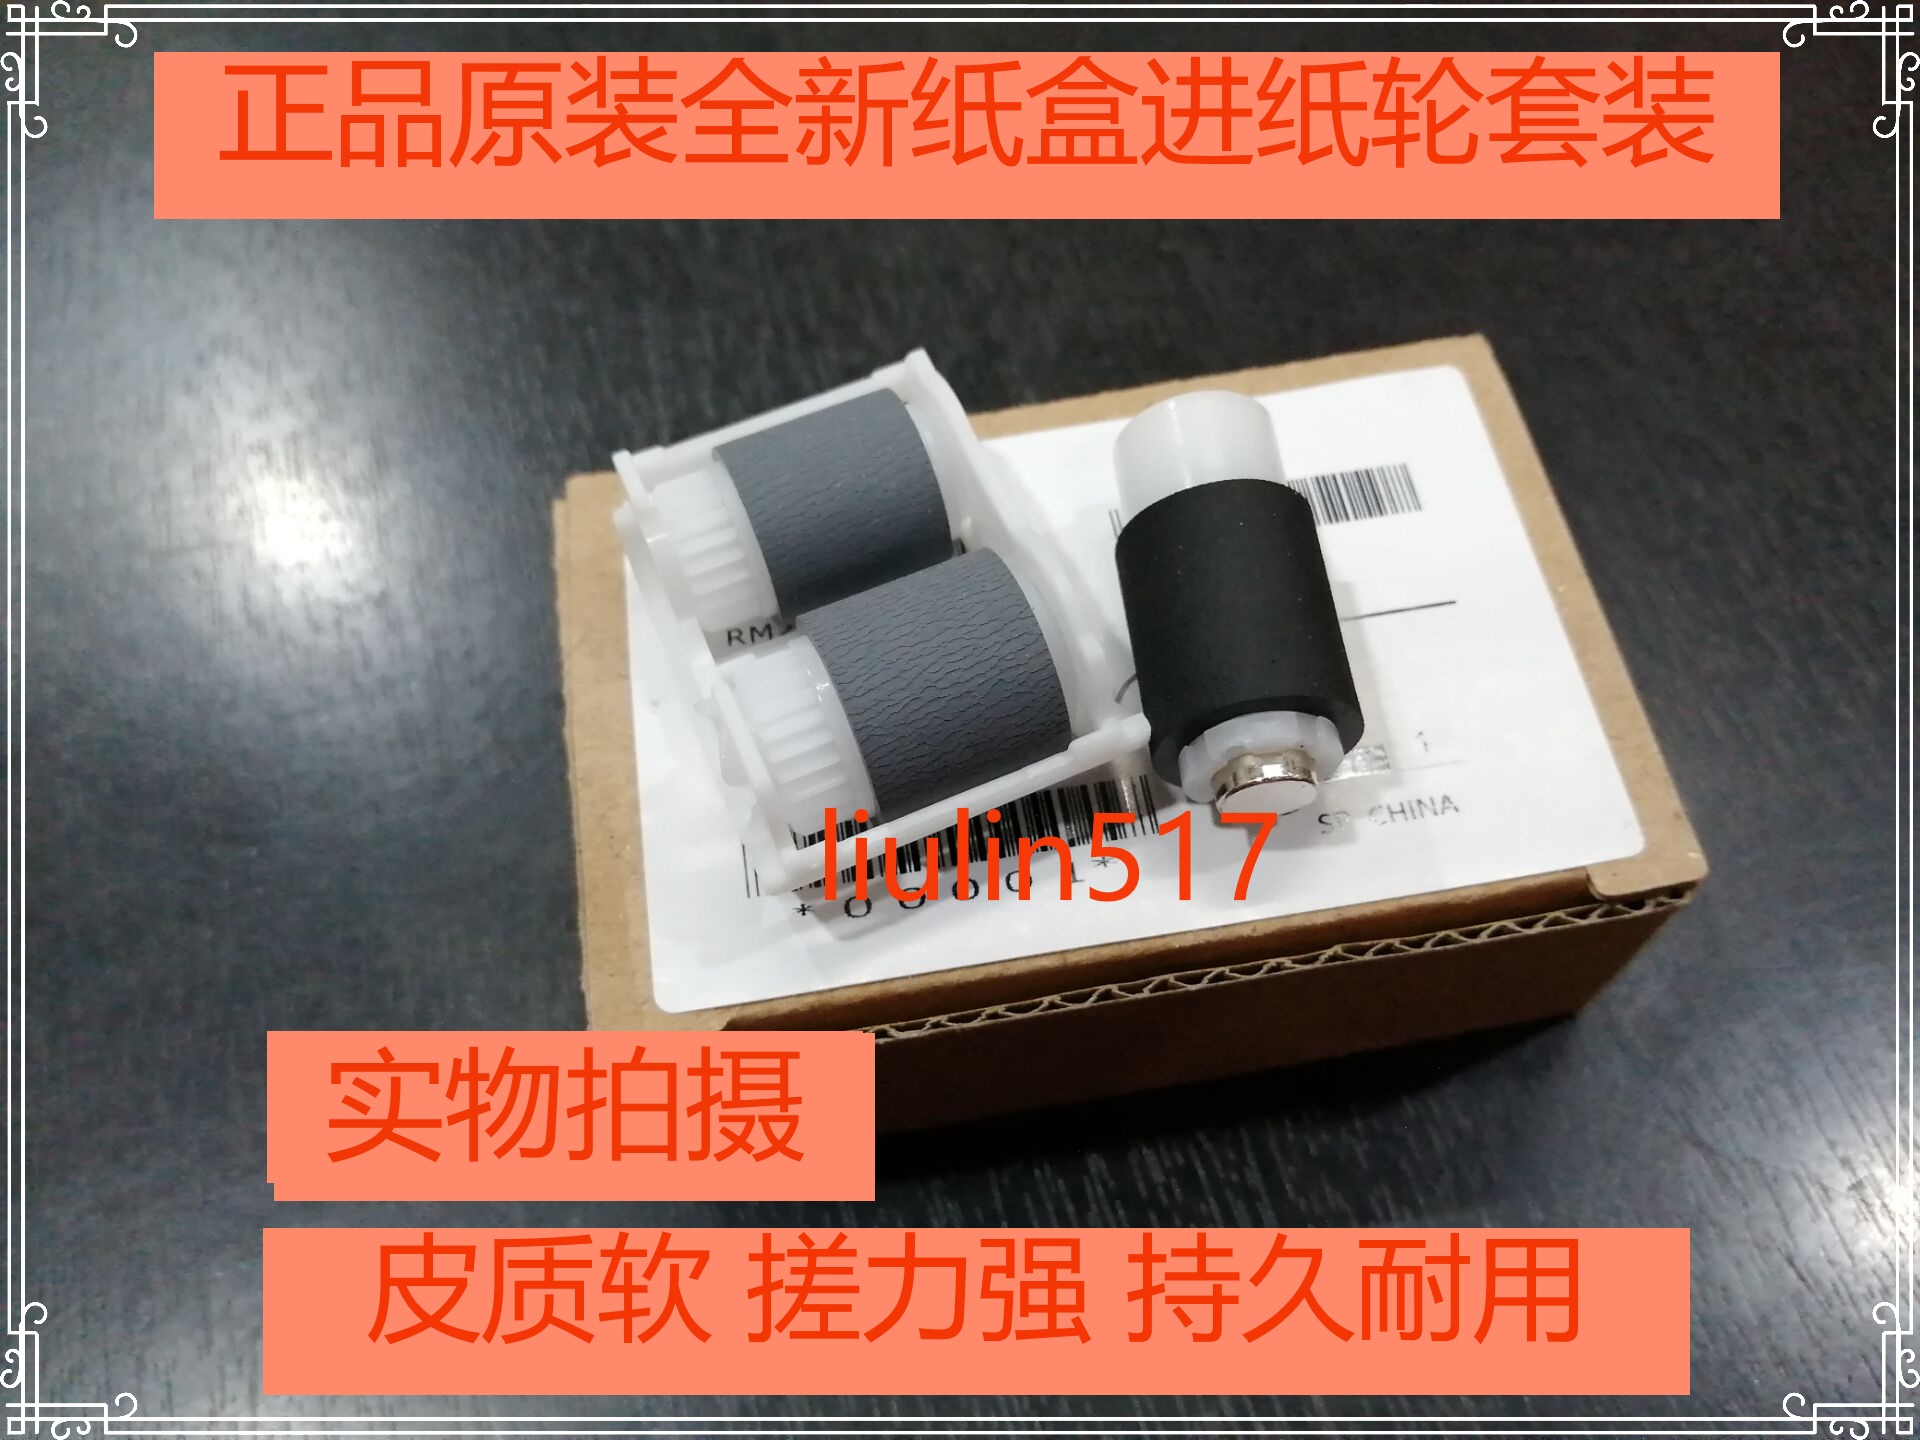 Original fit HP hp477 m452DW m479 377454 m479 M252N M252N 274n M277 M277 rubbing paper wheel-Taobao